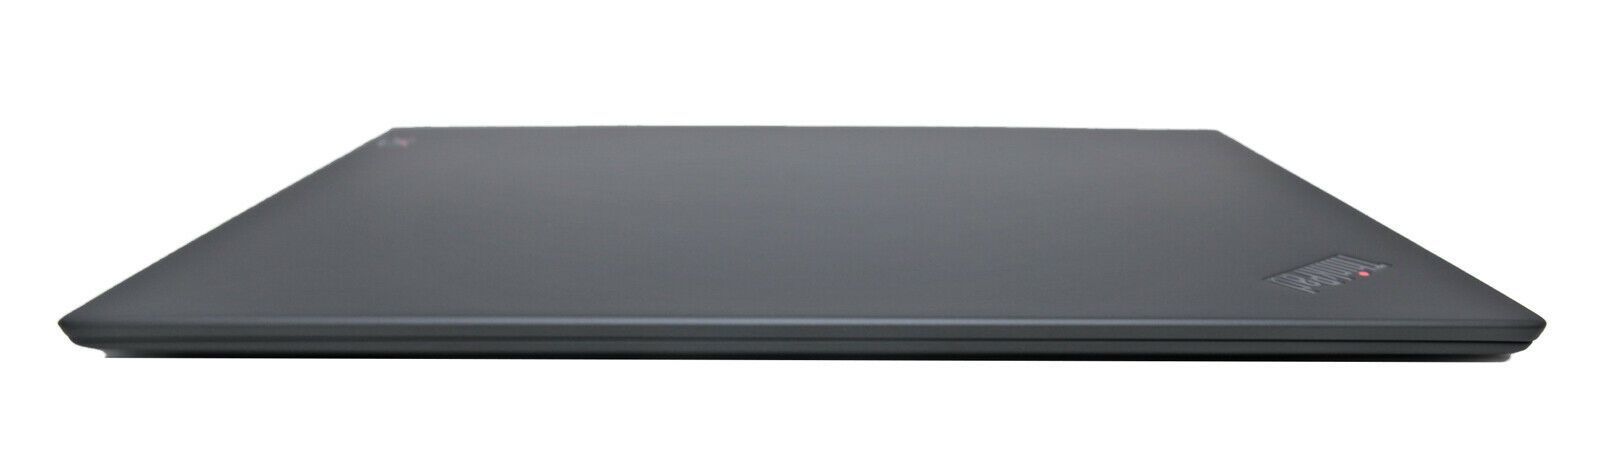 Lenovo Thinkpad X1 Carbon 6th Gen: Core i7-8550U, 512GB, HDR, LTE, Warranty - CruiseTech